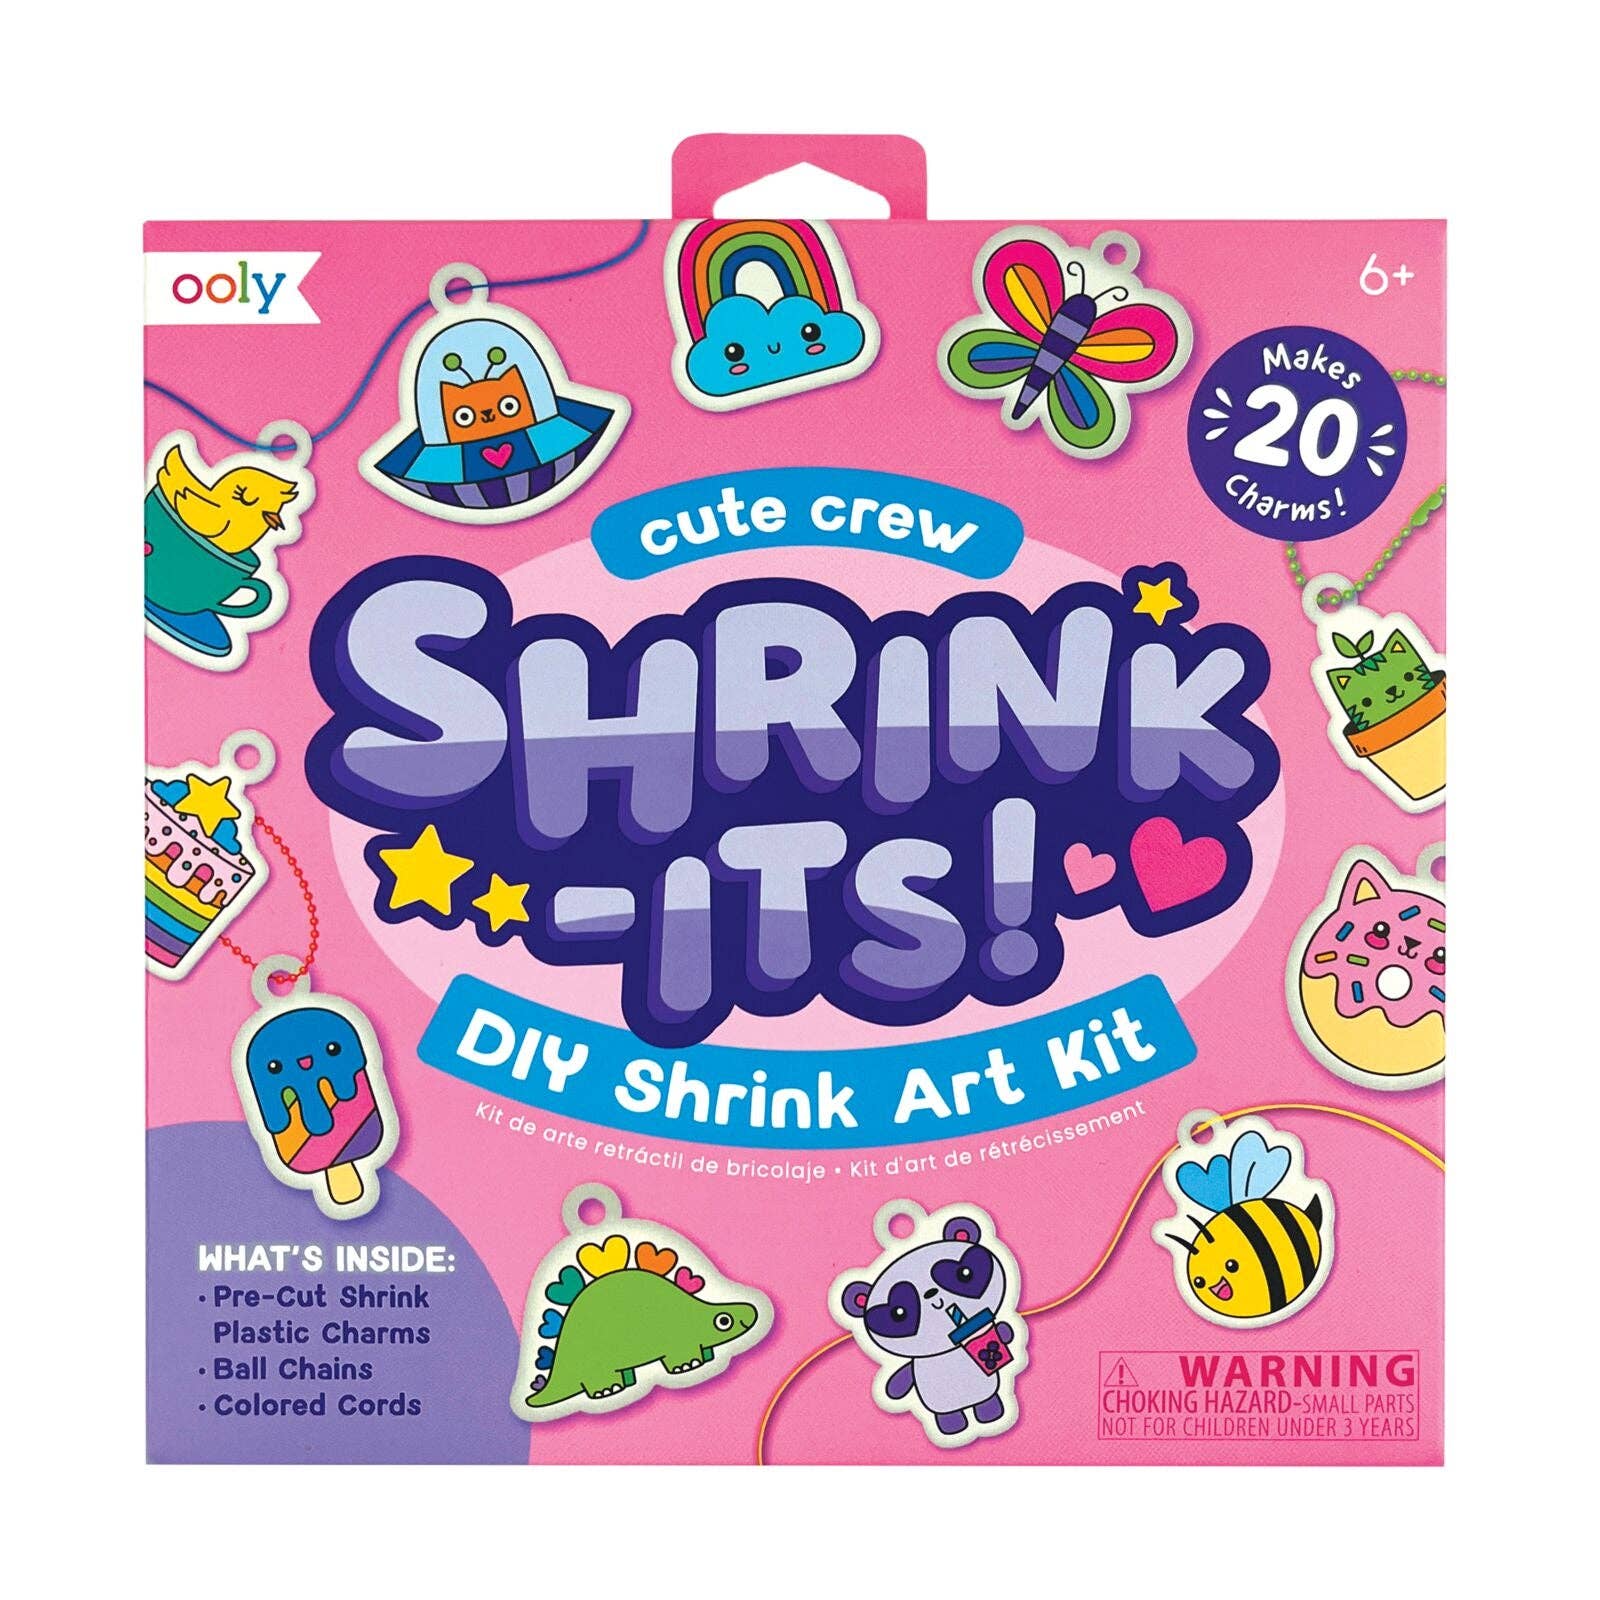 OOLY Shrink-Its! D.I.Y. Shrink Art Kit | Cute Crew